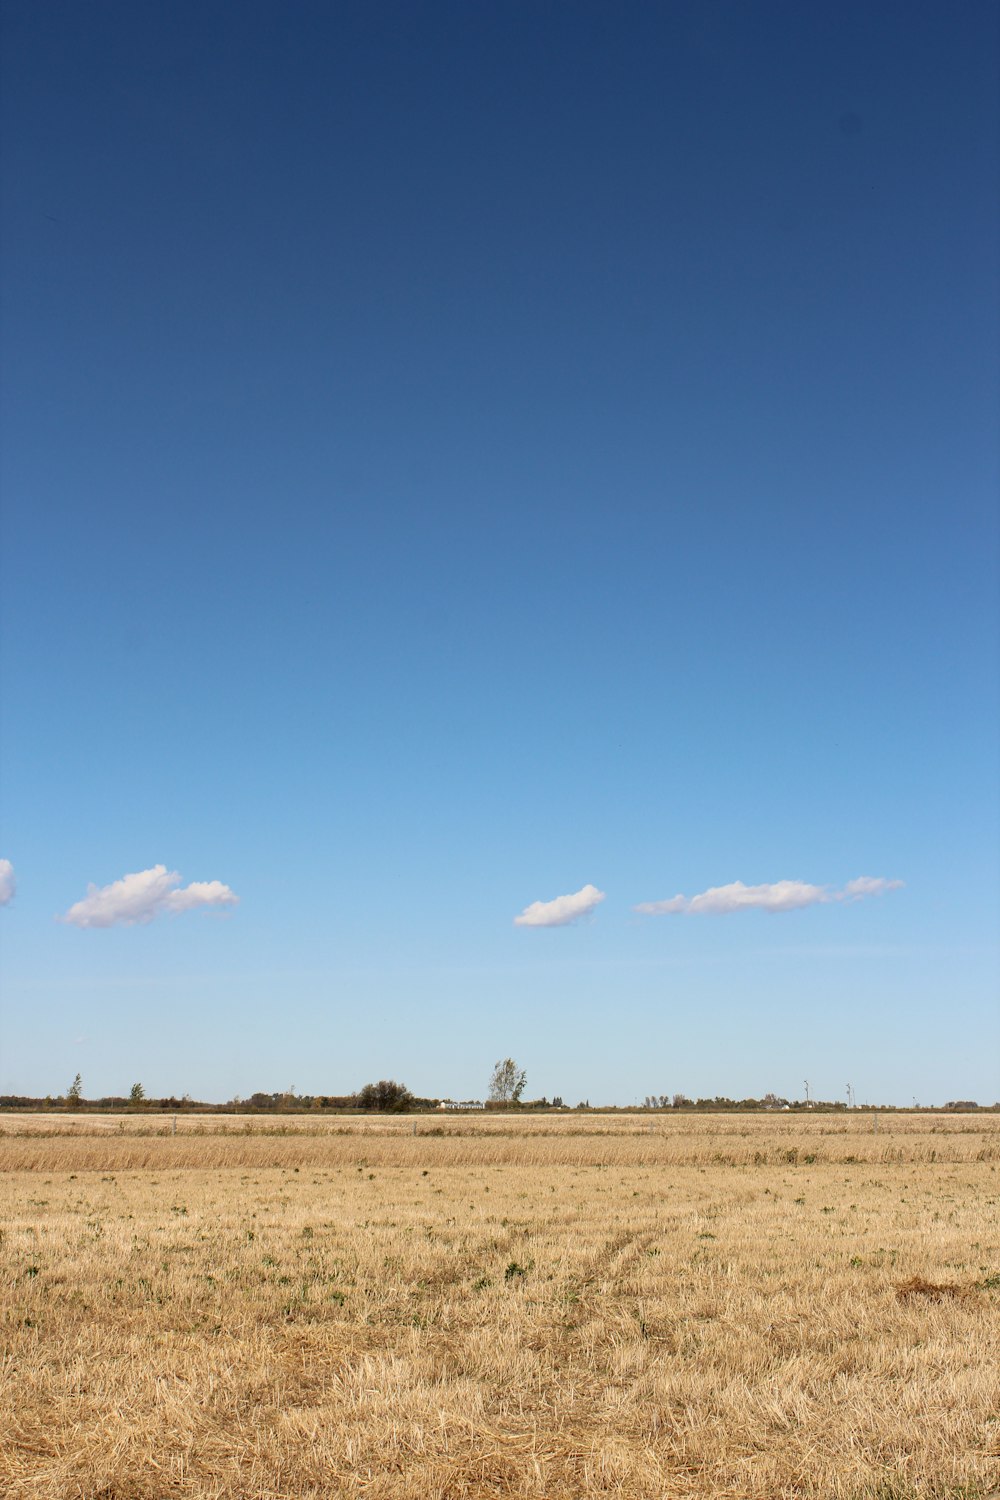 brown field under blue sky during daytime